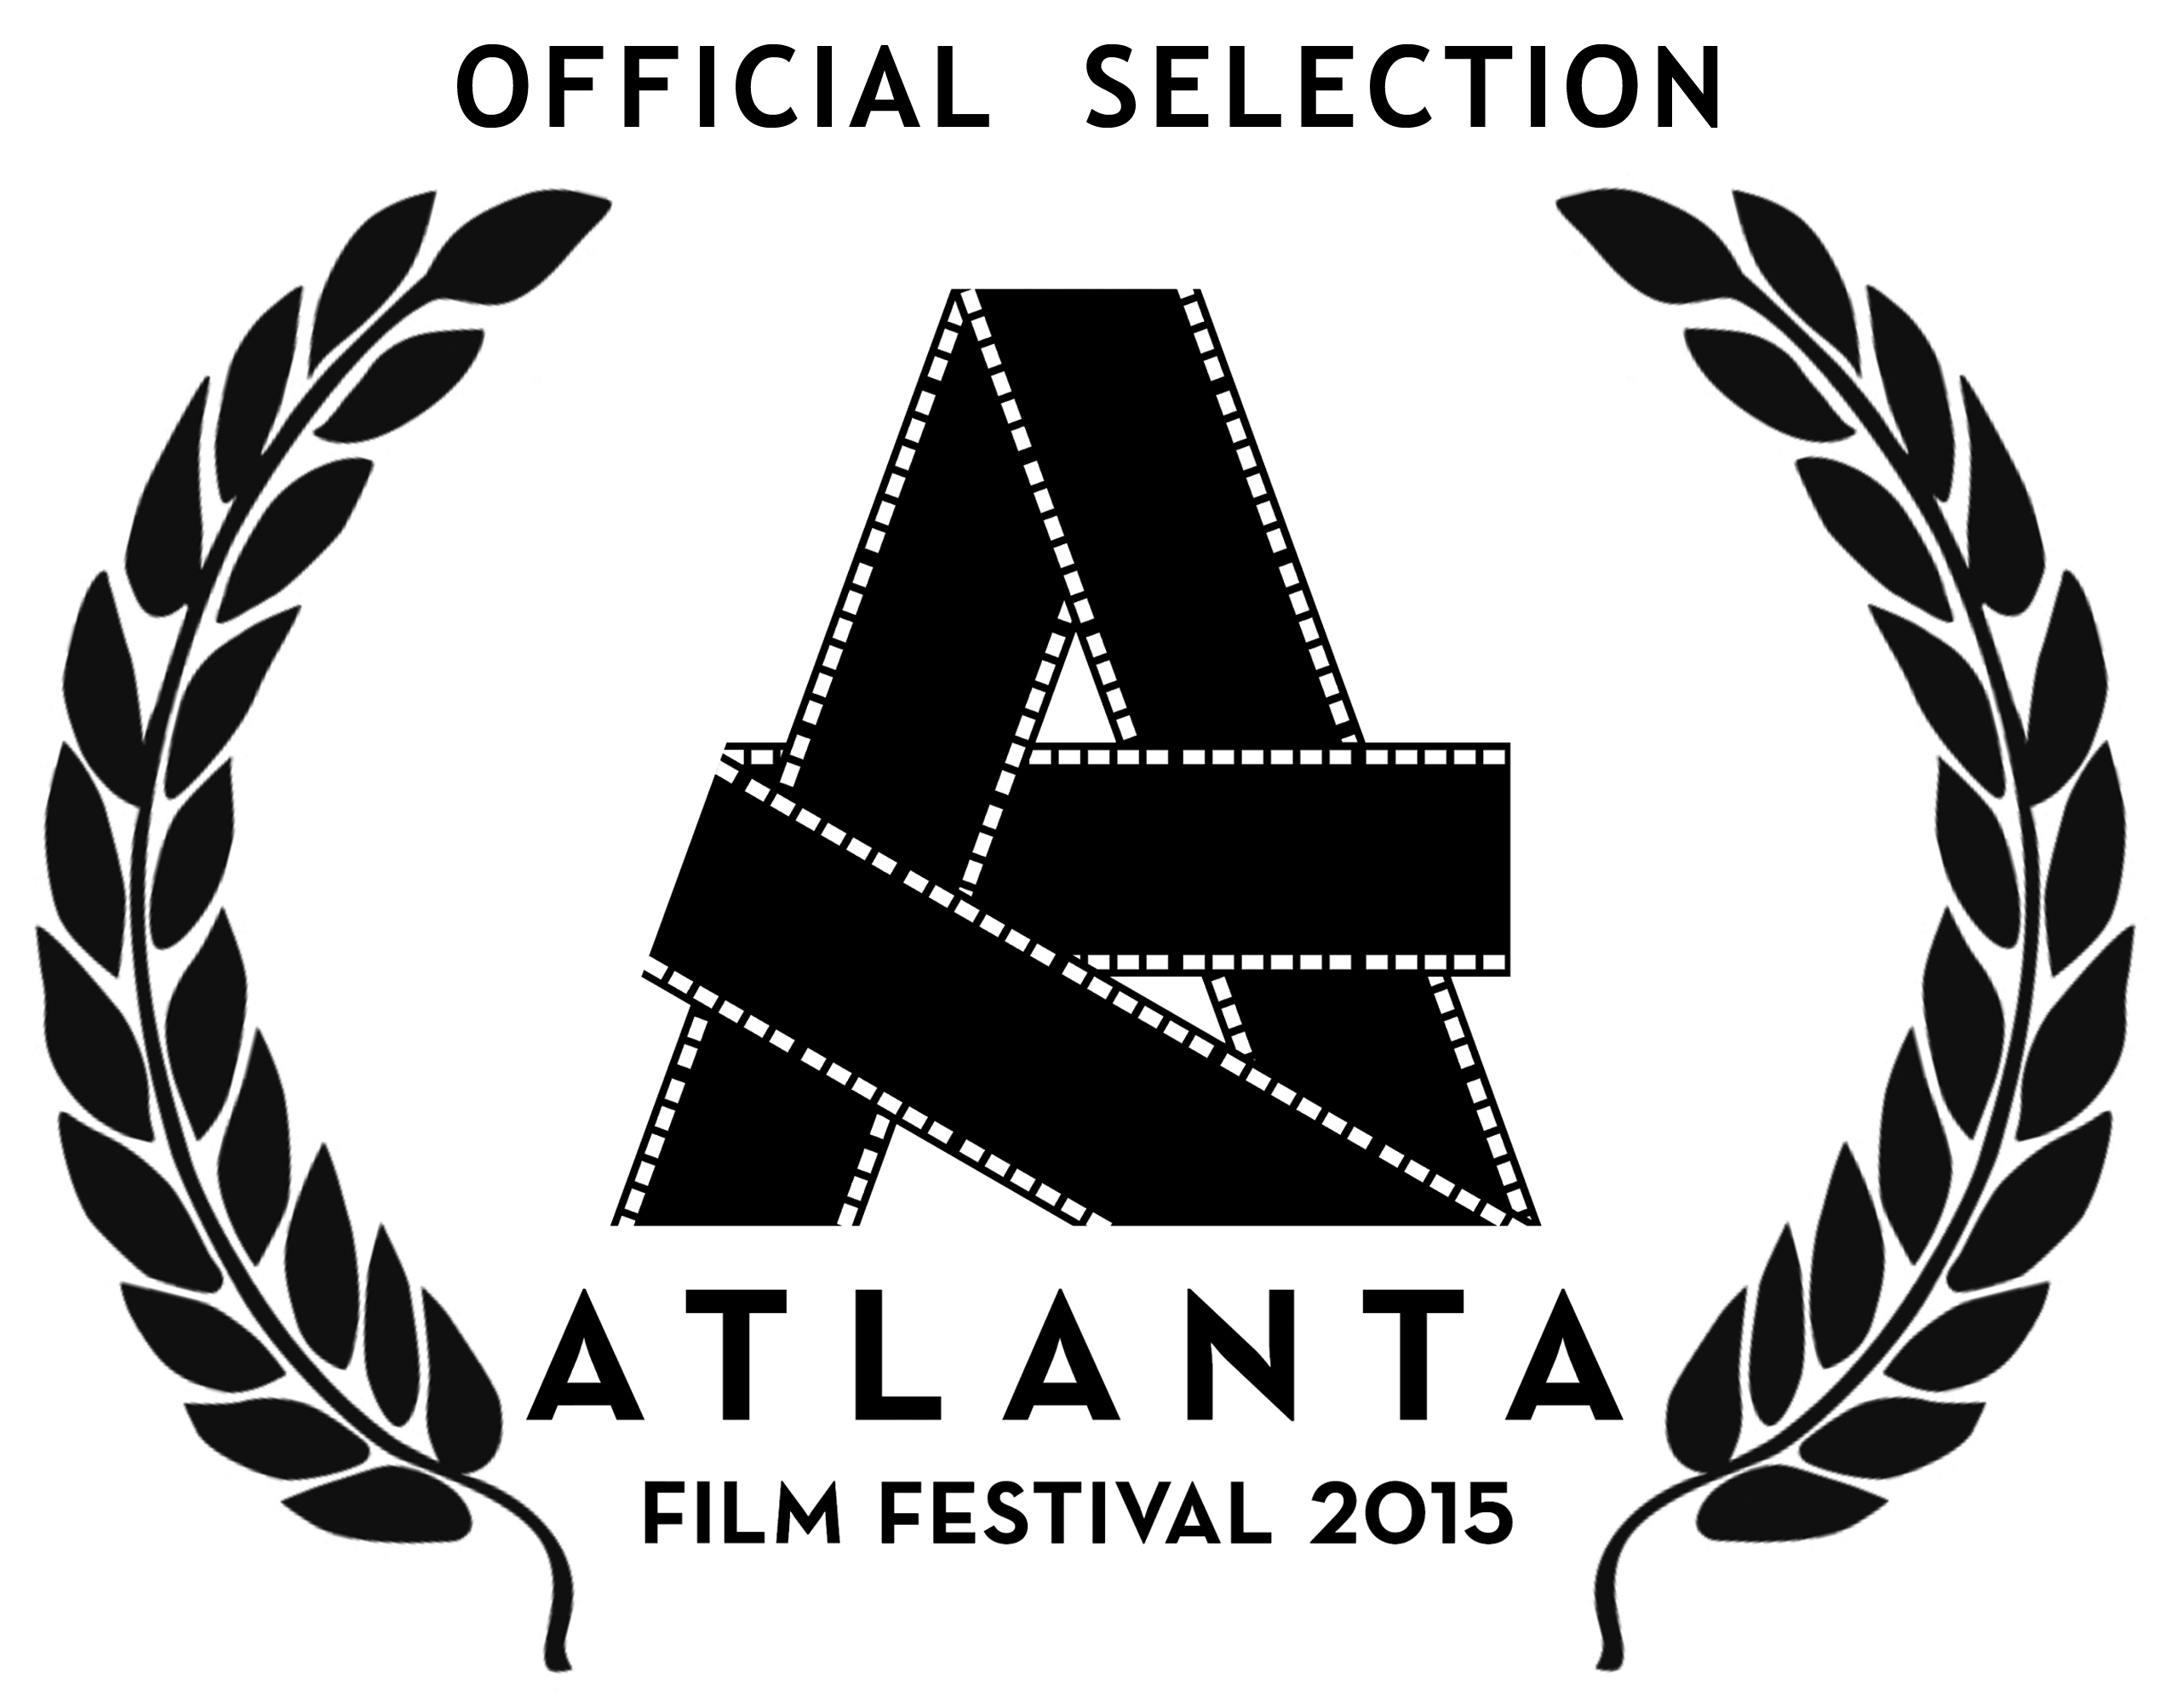 Official Selection Atlanta Film Festival 2015 - Matt Pacini